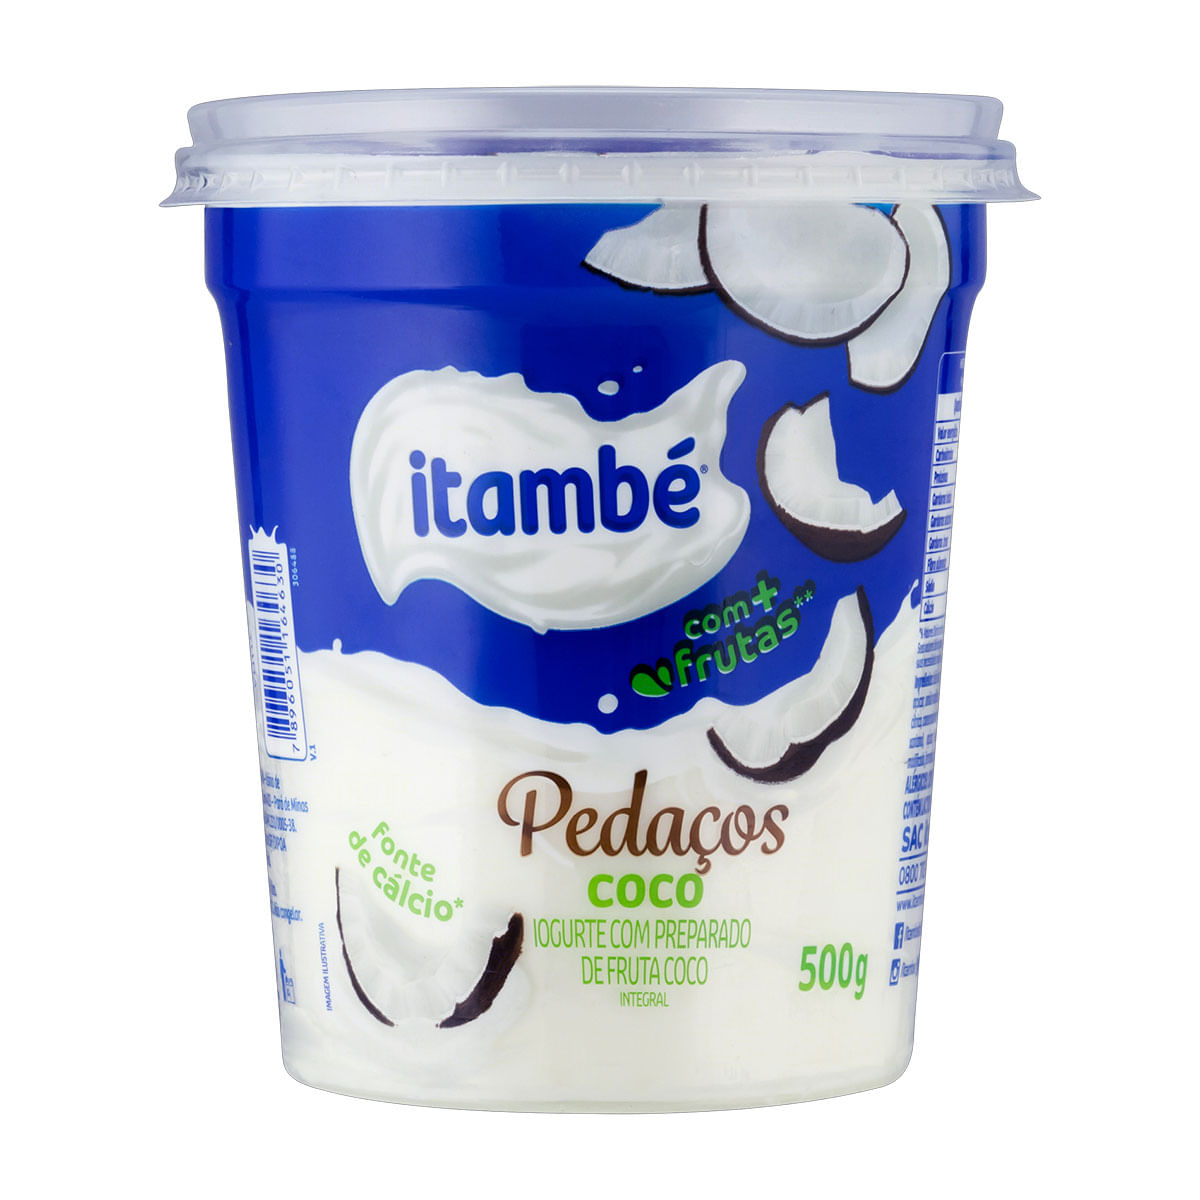 iogurte-integral-itambe-pedacos-coco-500-g-1.jpg